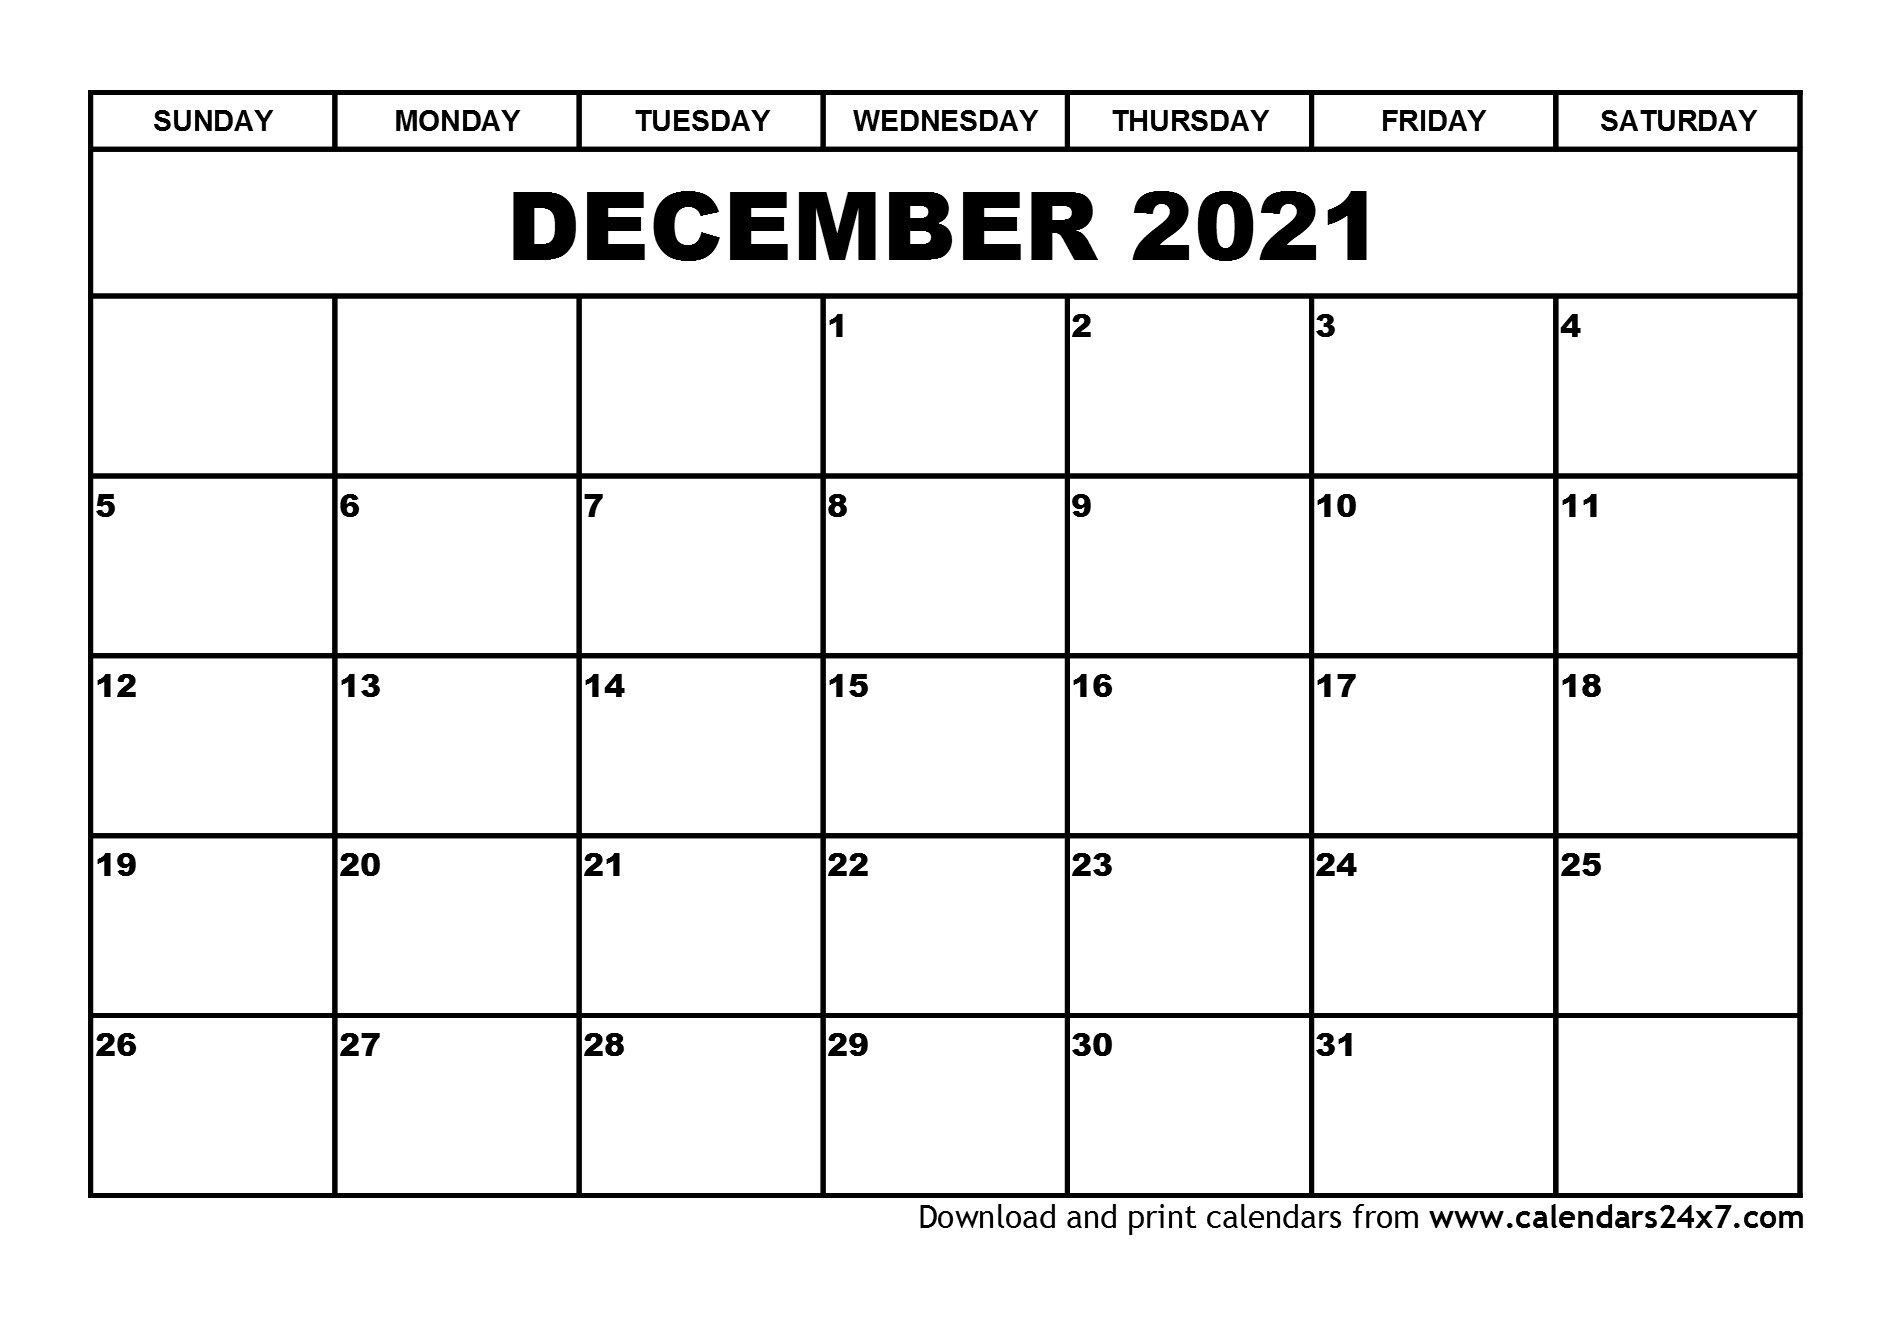 December 2021 Calendar &amp; January 2022 Calendar 2021 Calendar From January To December